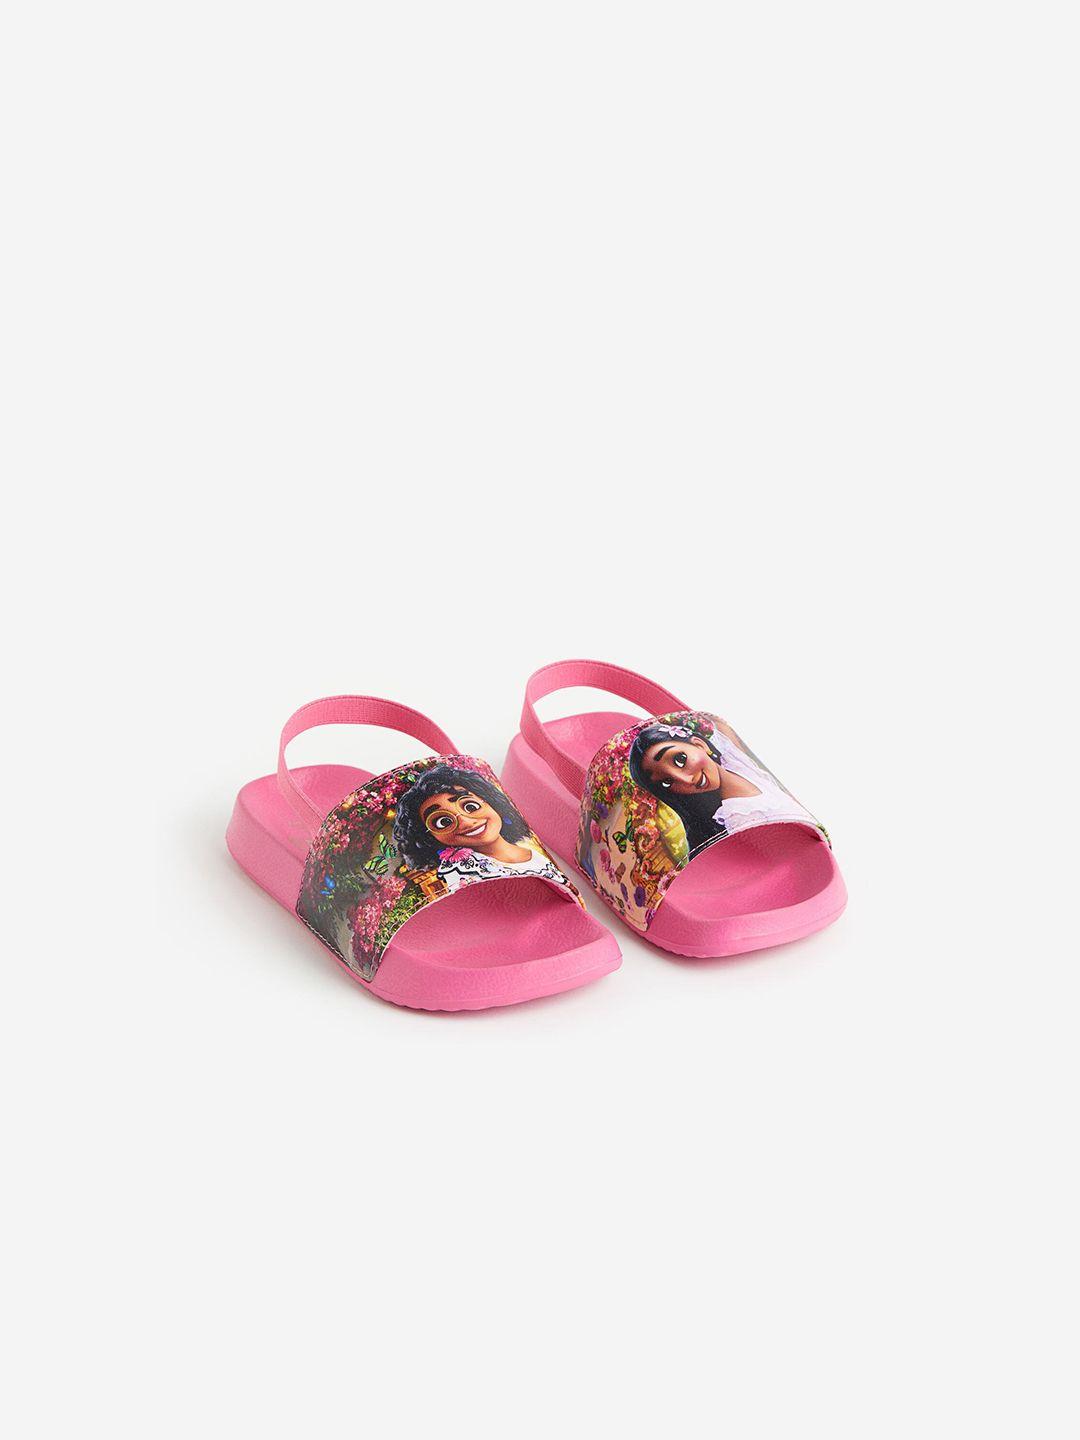 h&m girls printed pool shoes